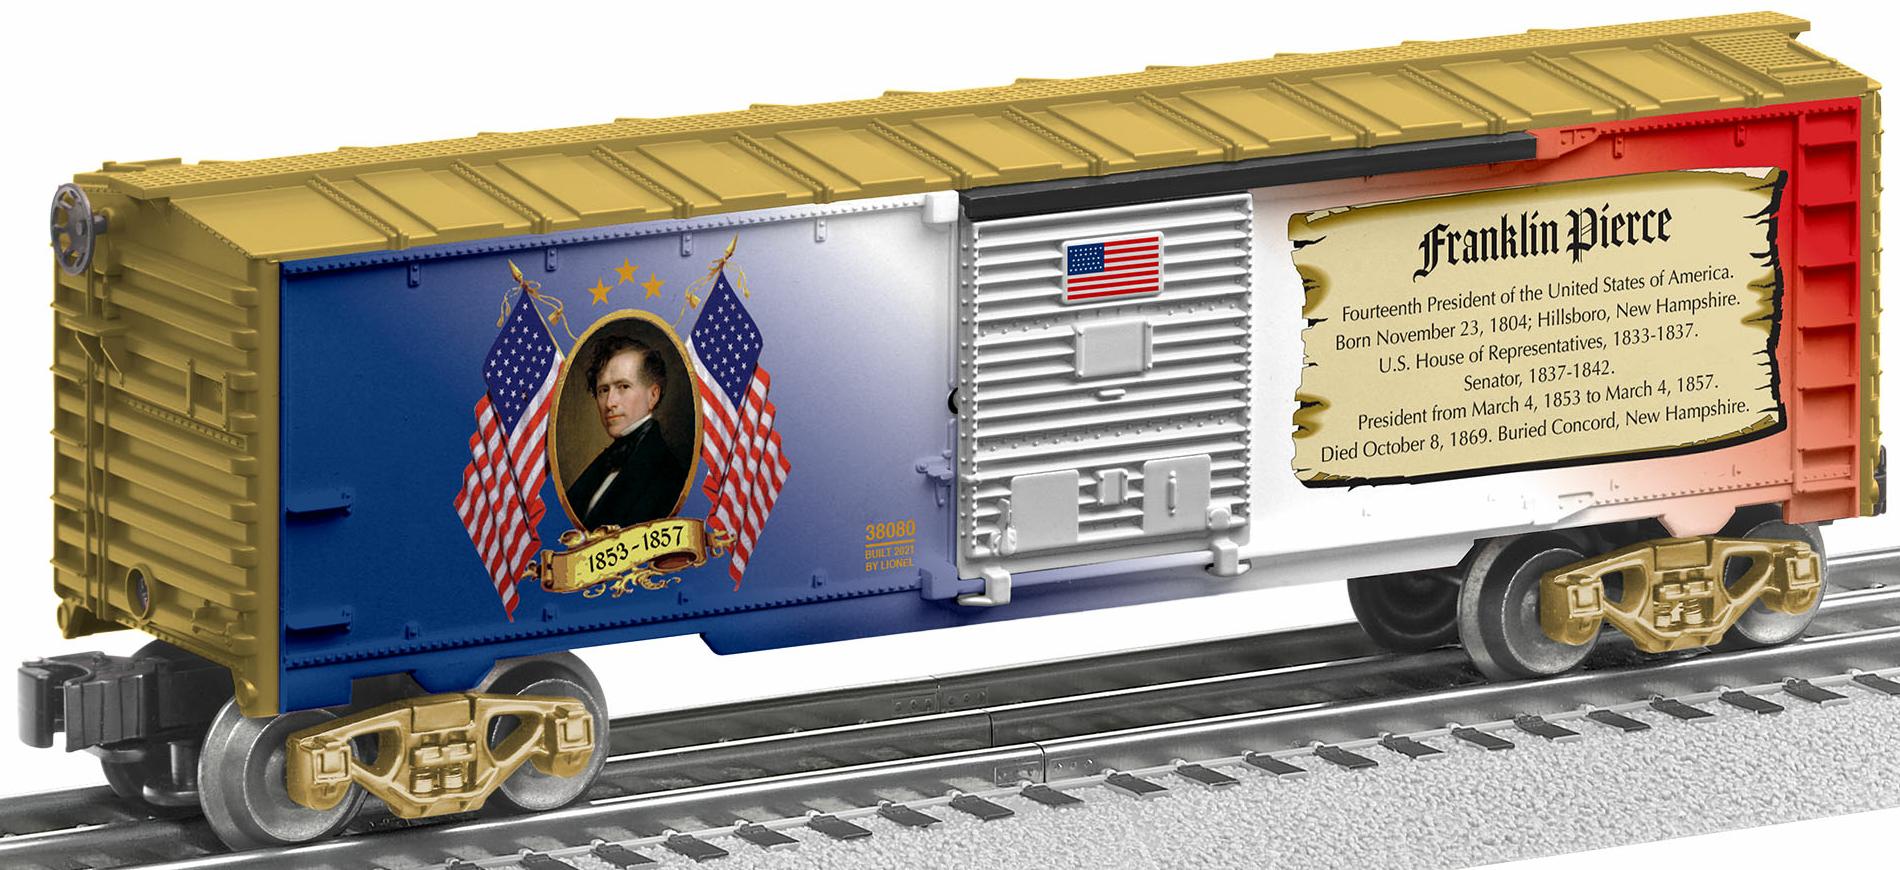 Franklin Pierce boxcar image